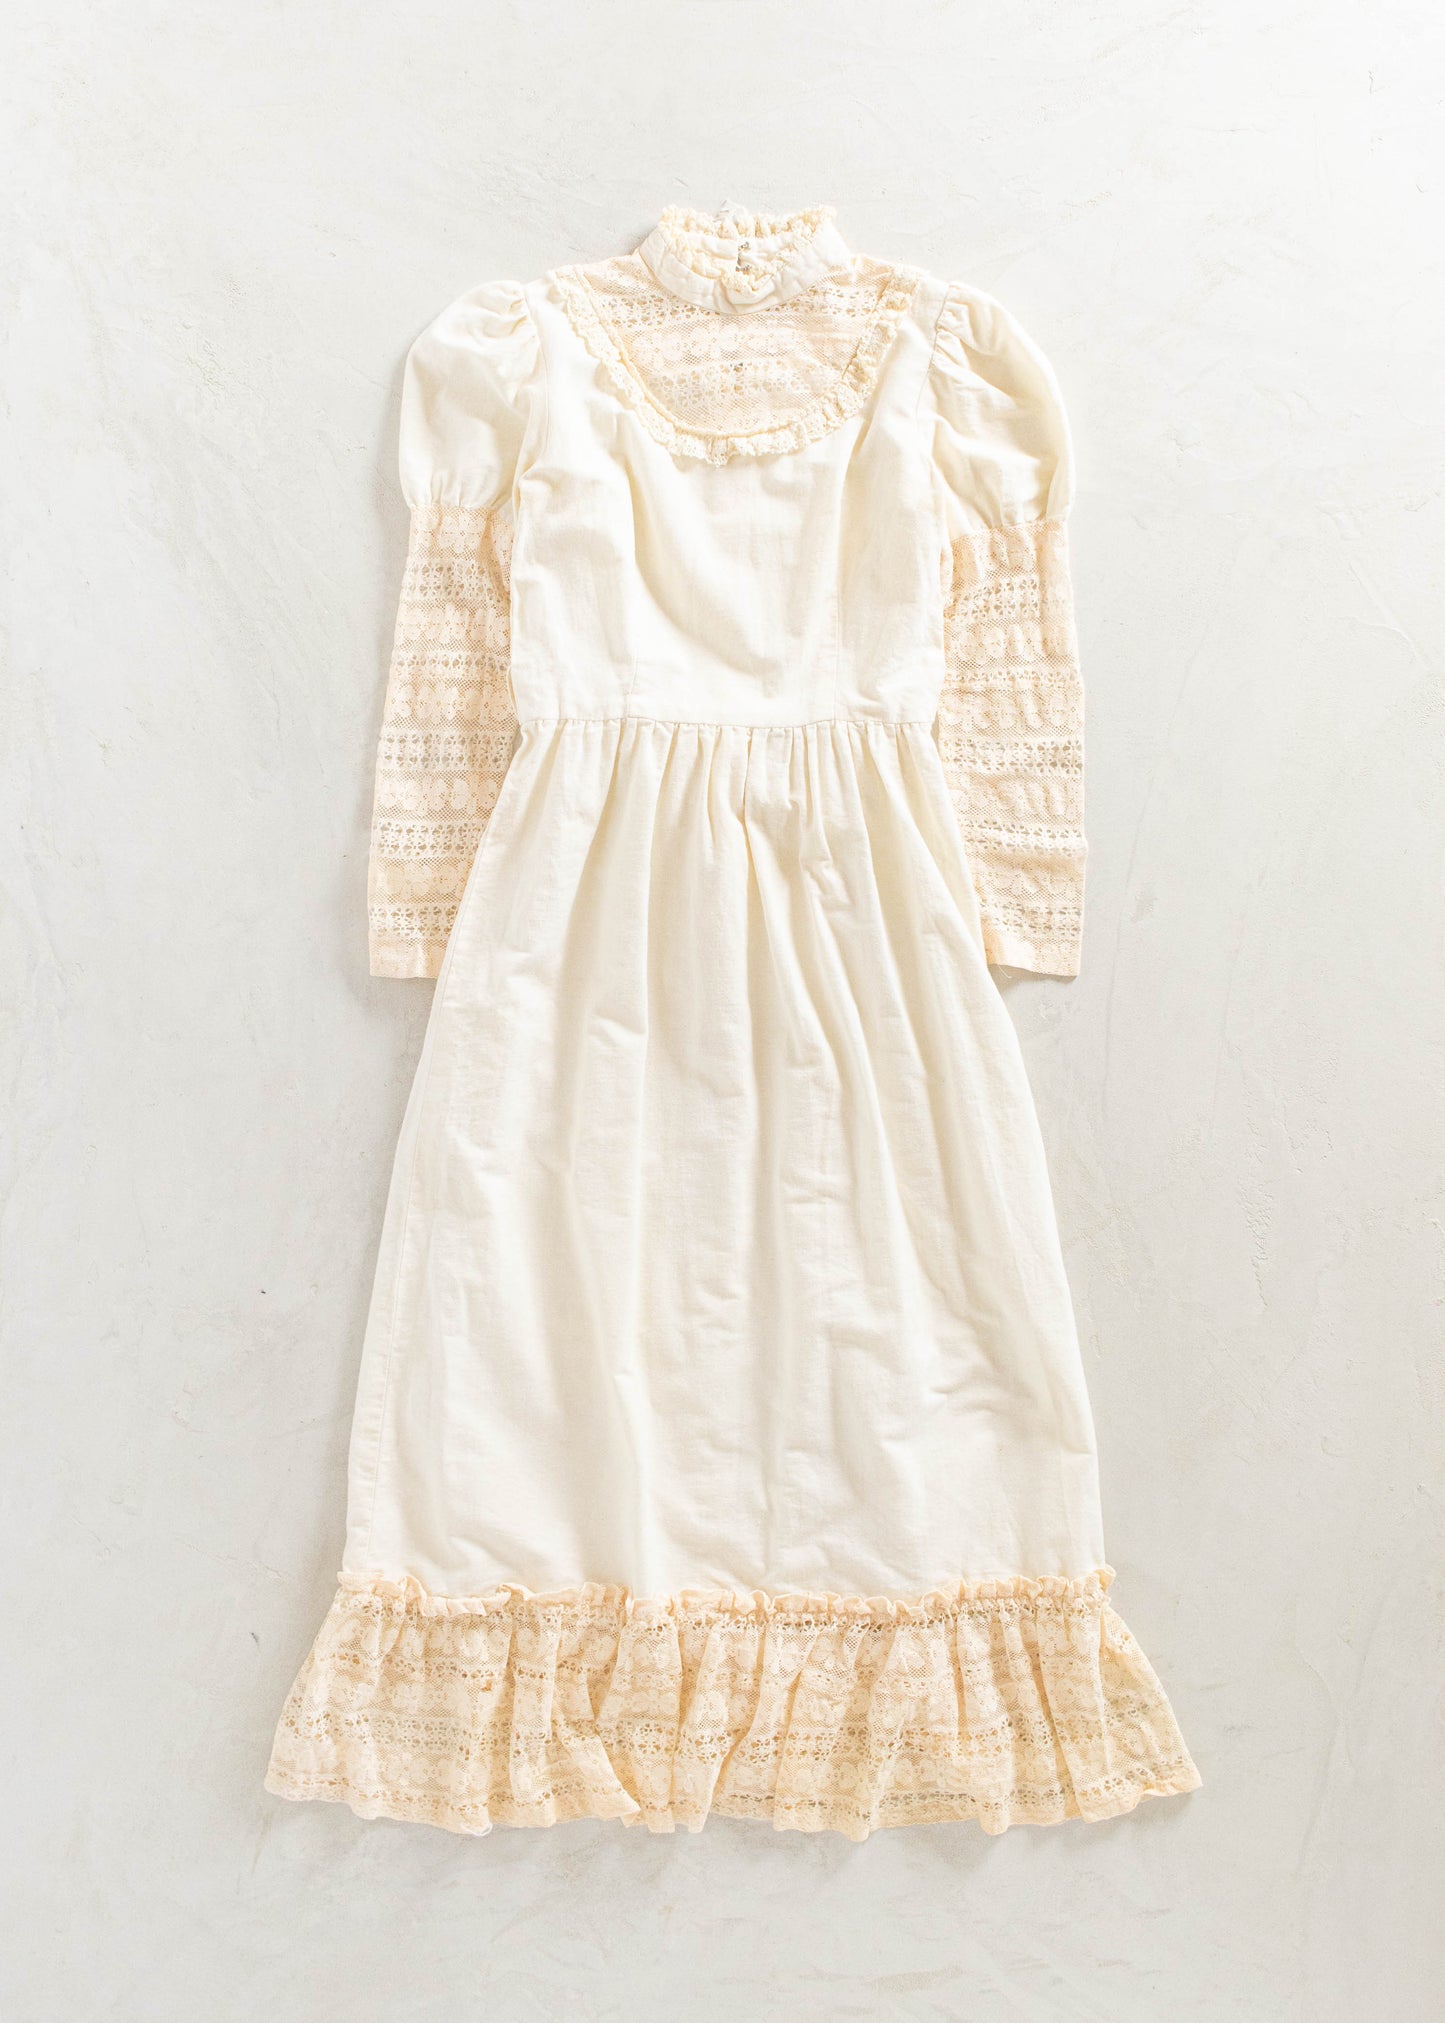 Vintage 1970s Handmade Cotton Dress Size 2XS/XS